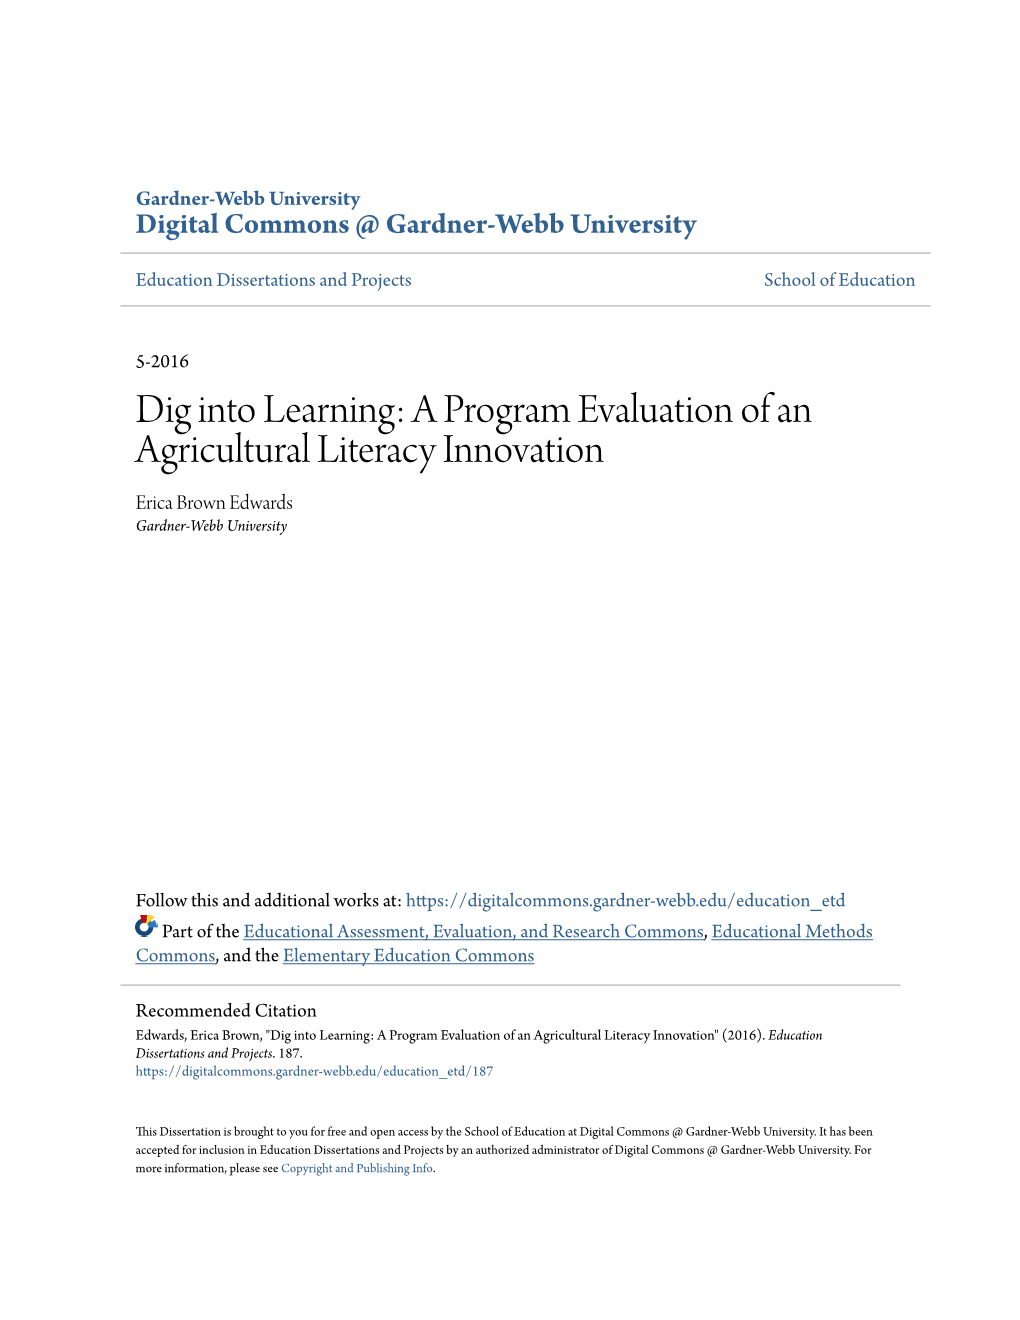 A Program Evaluation of an Agricultural Literacy Innovation Erica Brown Edwards Gardner-Webb University